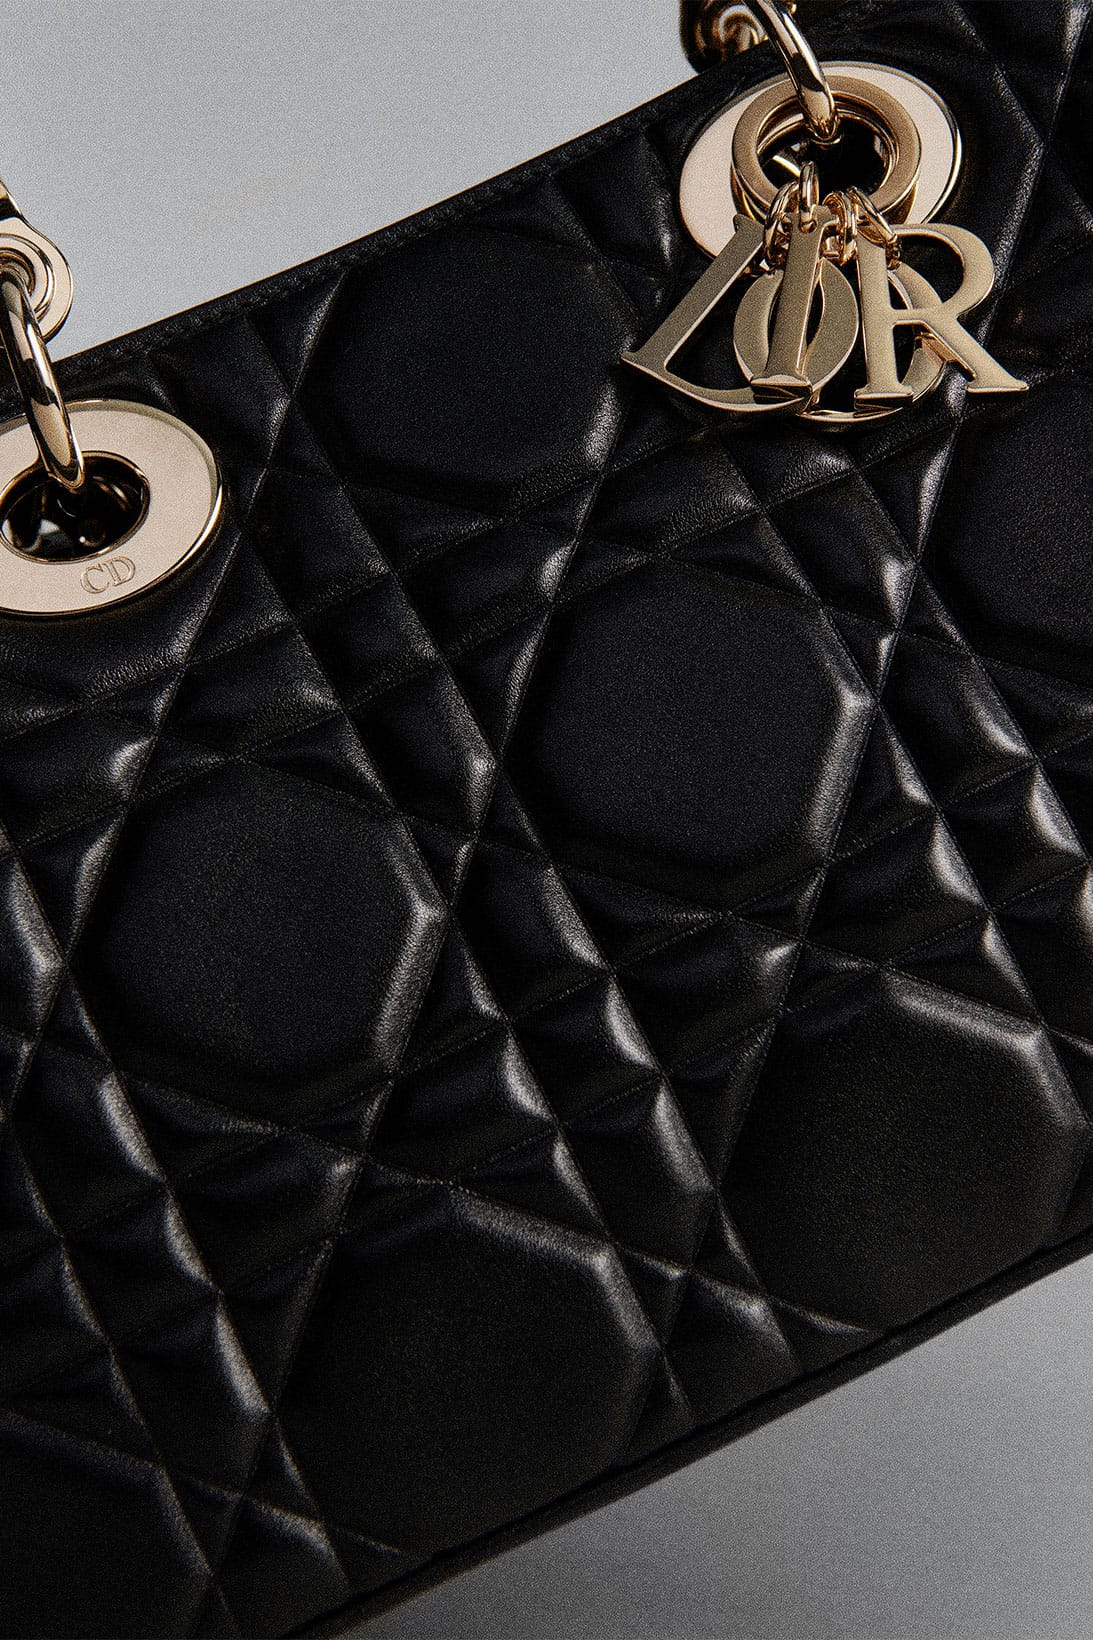 Christian Dior by John Galliano Lizard Black Leather Bag Shoulder Satchel  Purse | eBay